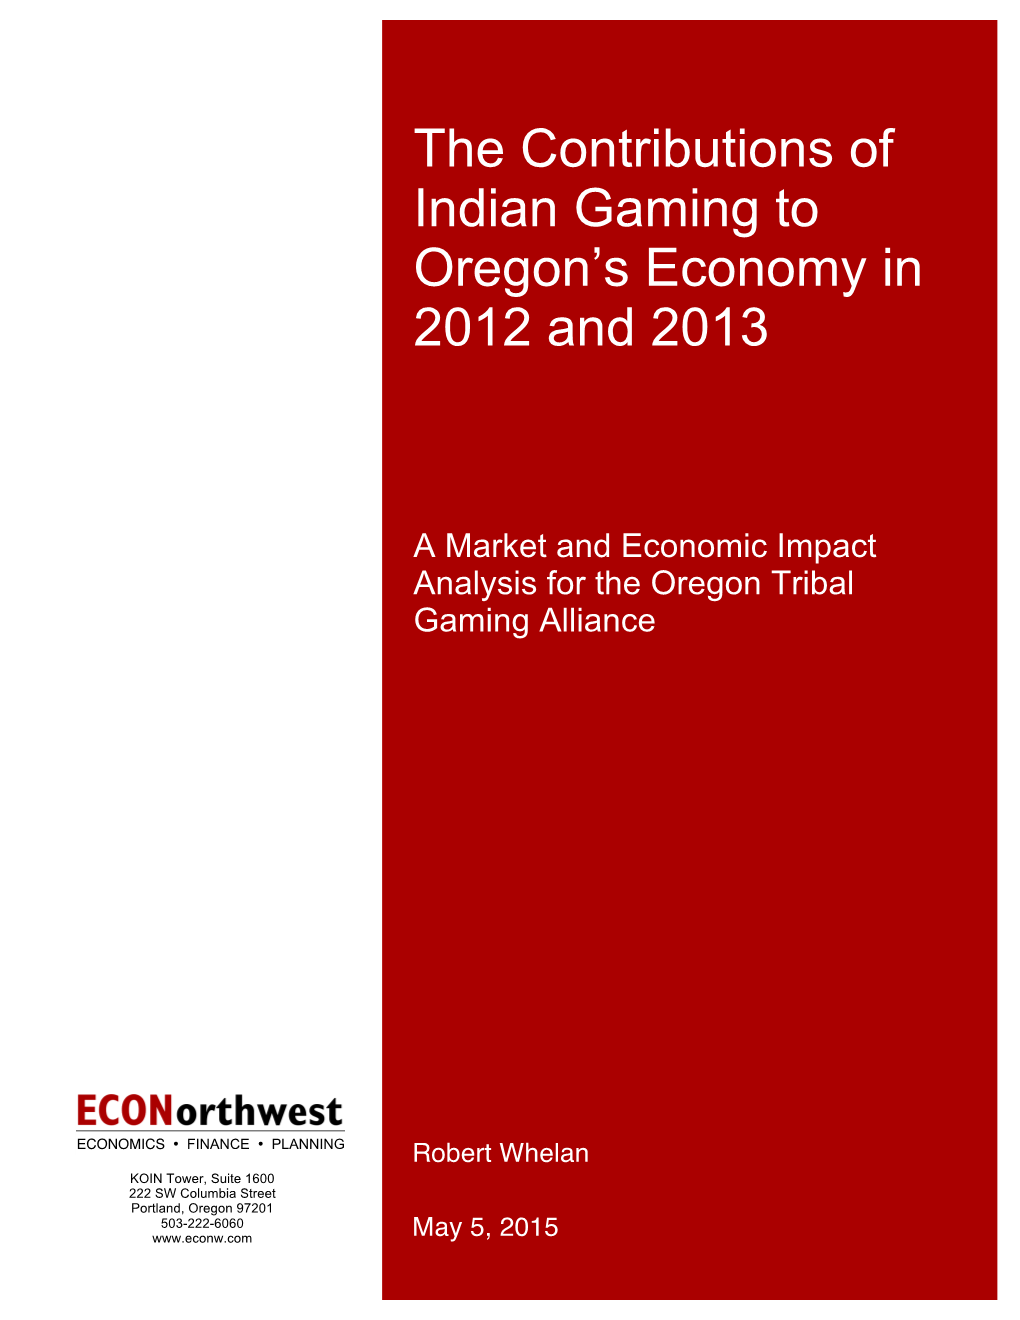 Final 2012/2013 Economic Impact Report